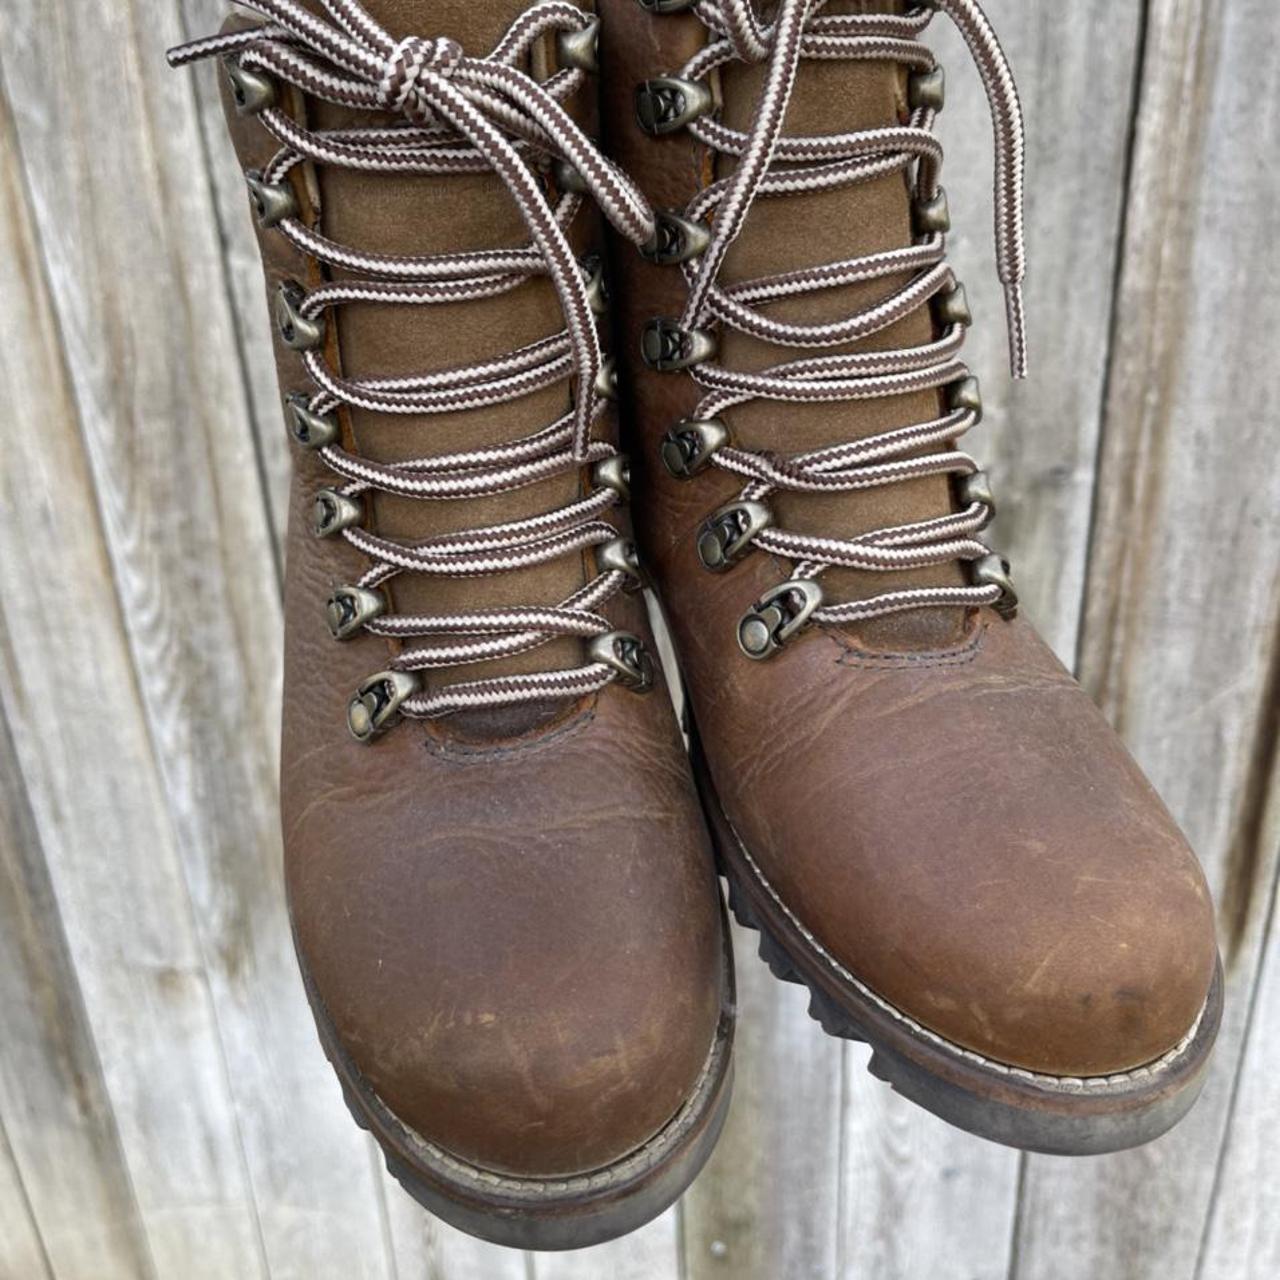 Product Image 2 - Kodiak leather insulated waterproof boots!